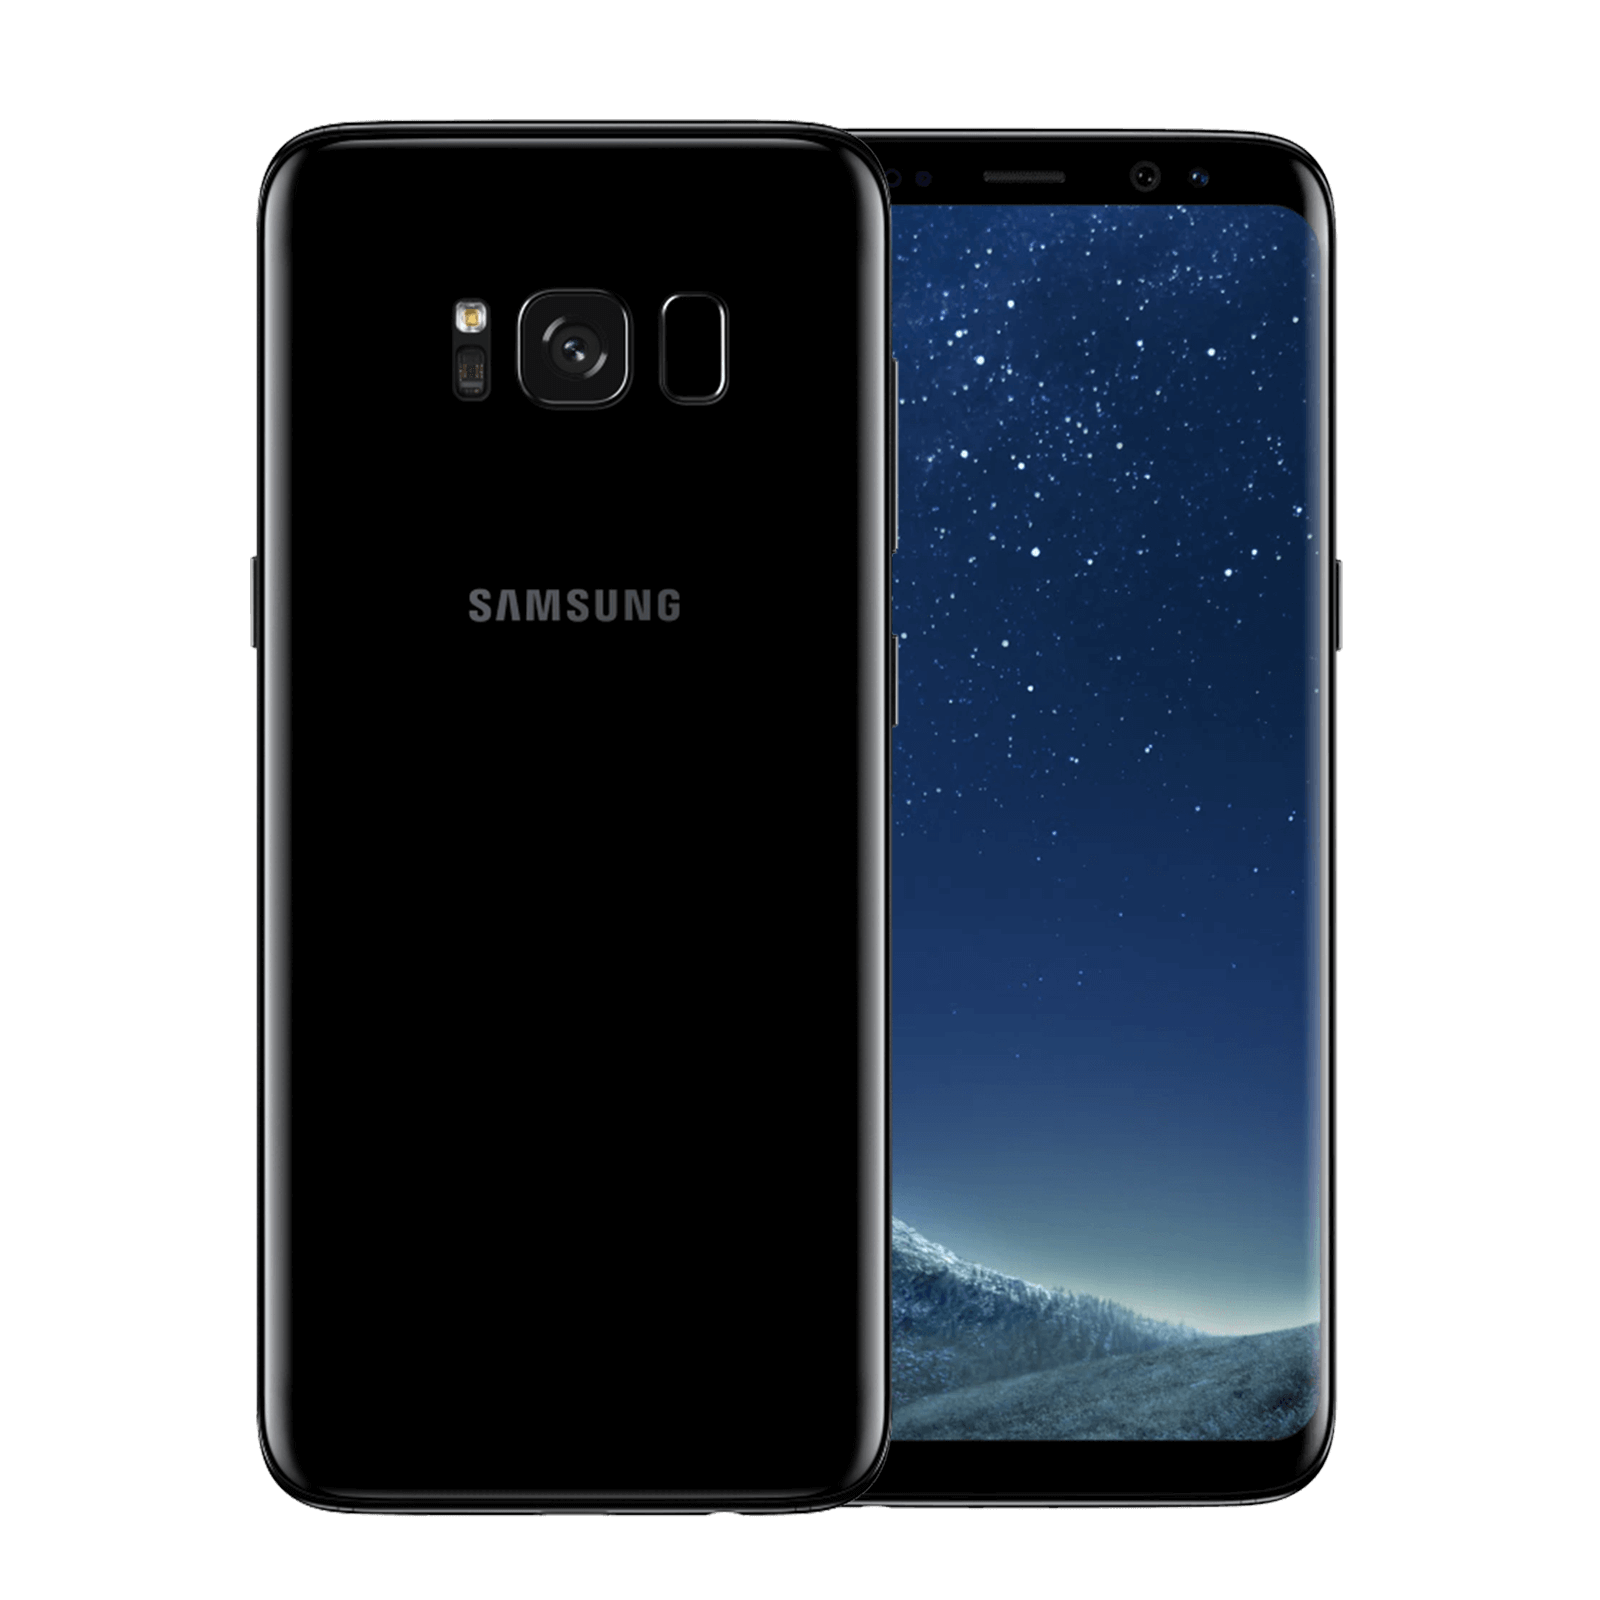 Samsung Galaxy S8 Plus 64GB Black Very good - Unlocked